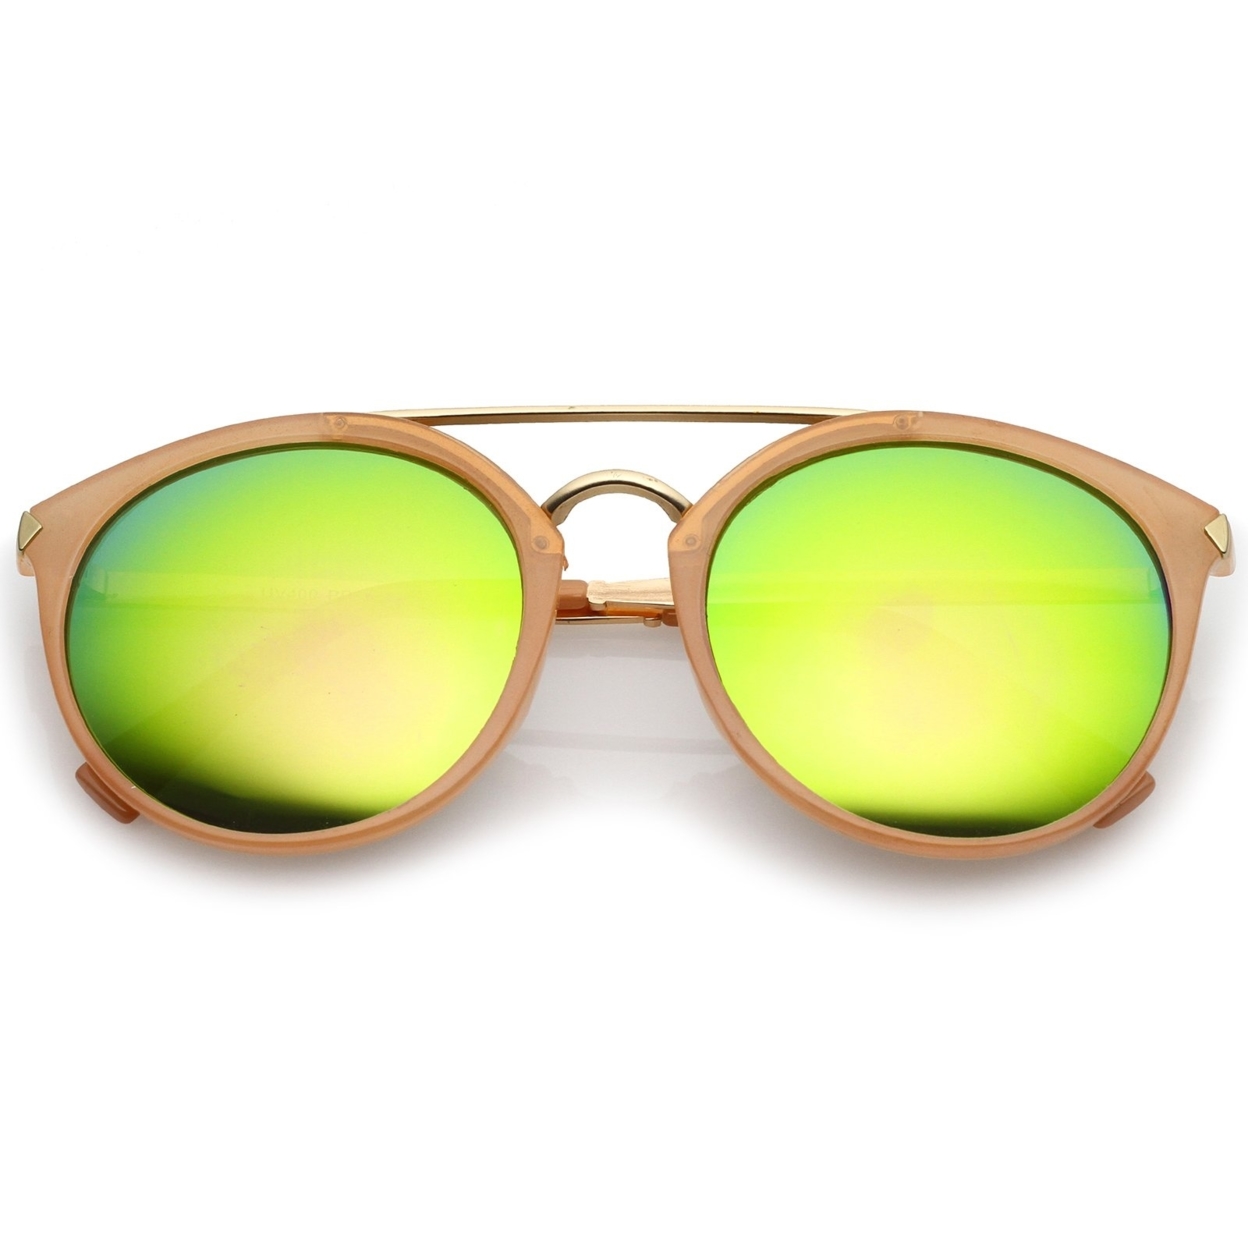 Modern Double Bridge Colored Mirror Lens Round Aviator Sunglasses 57mm - Nude-Gold / Gold Mirror